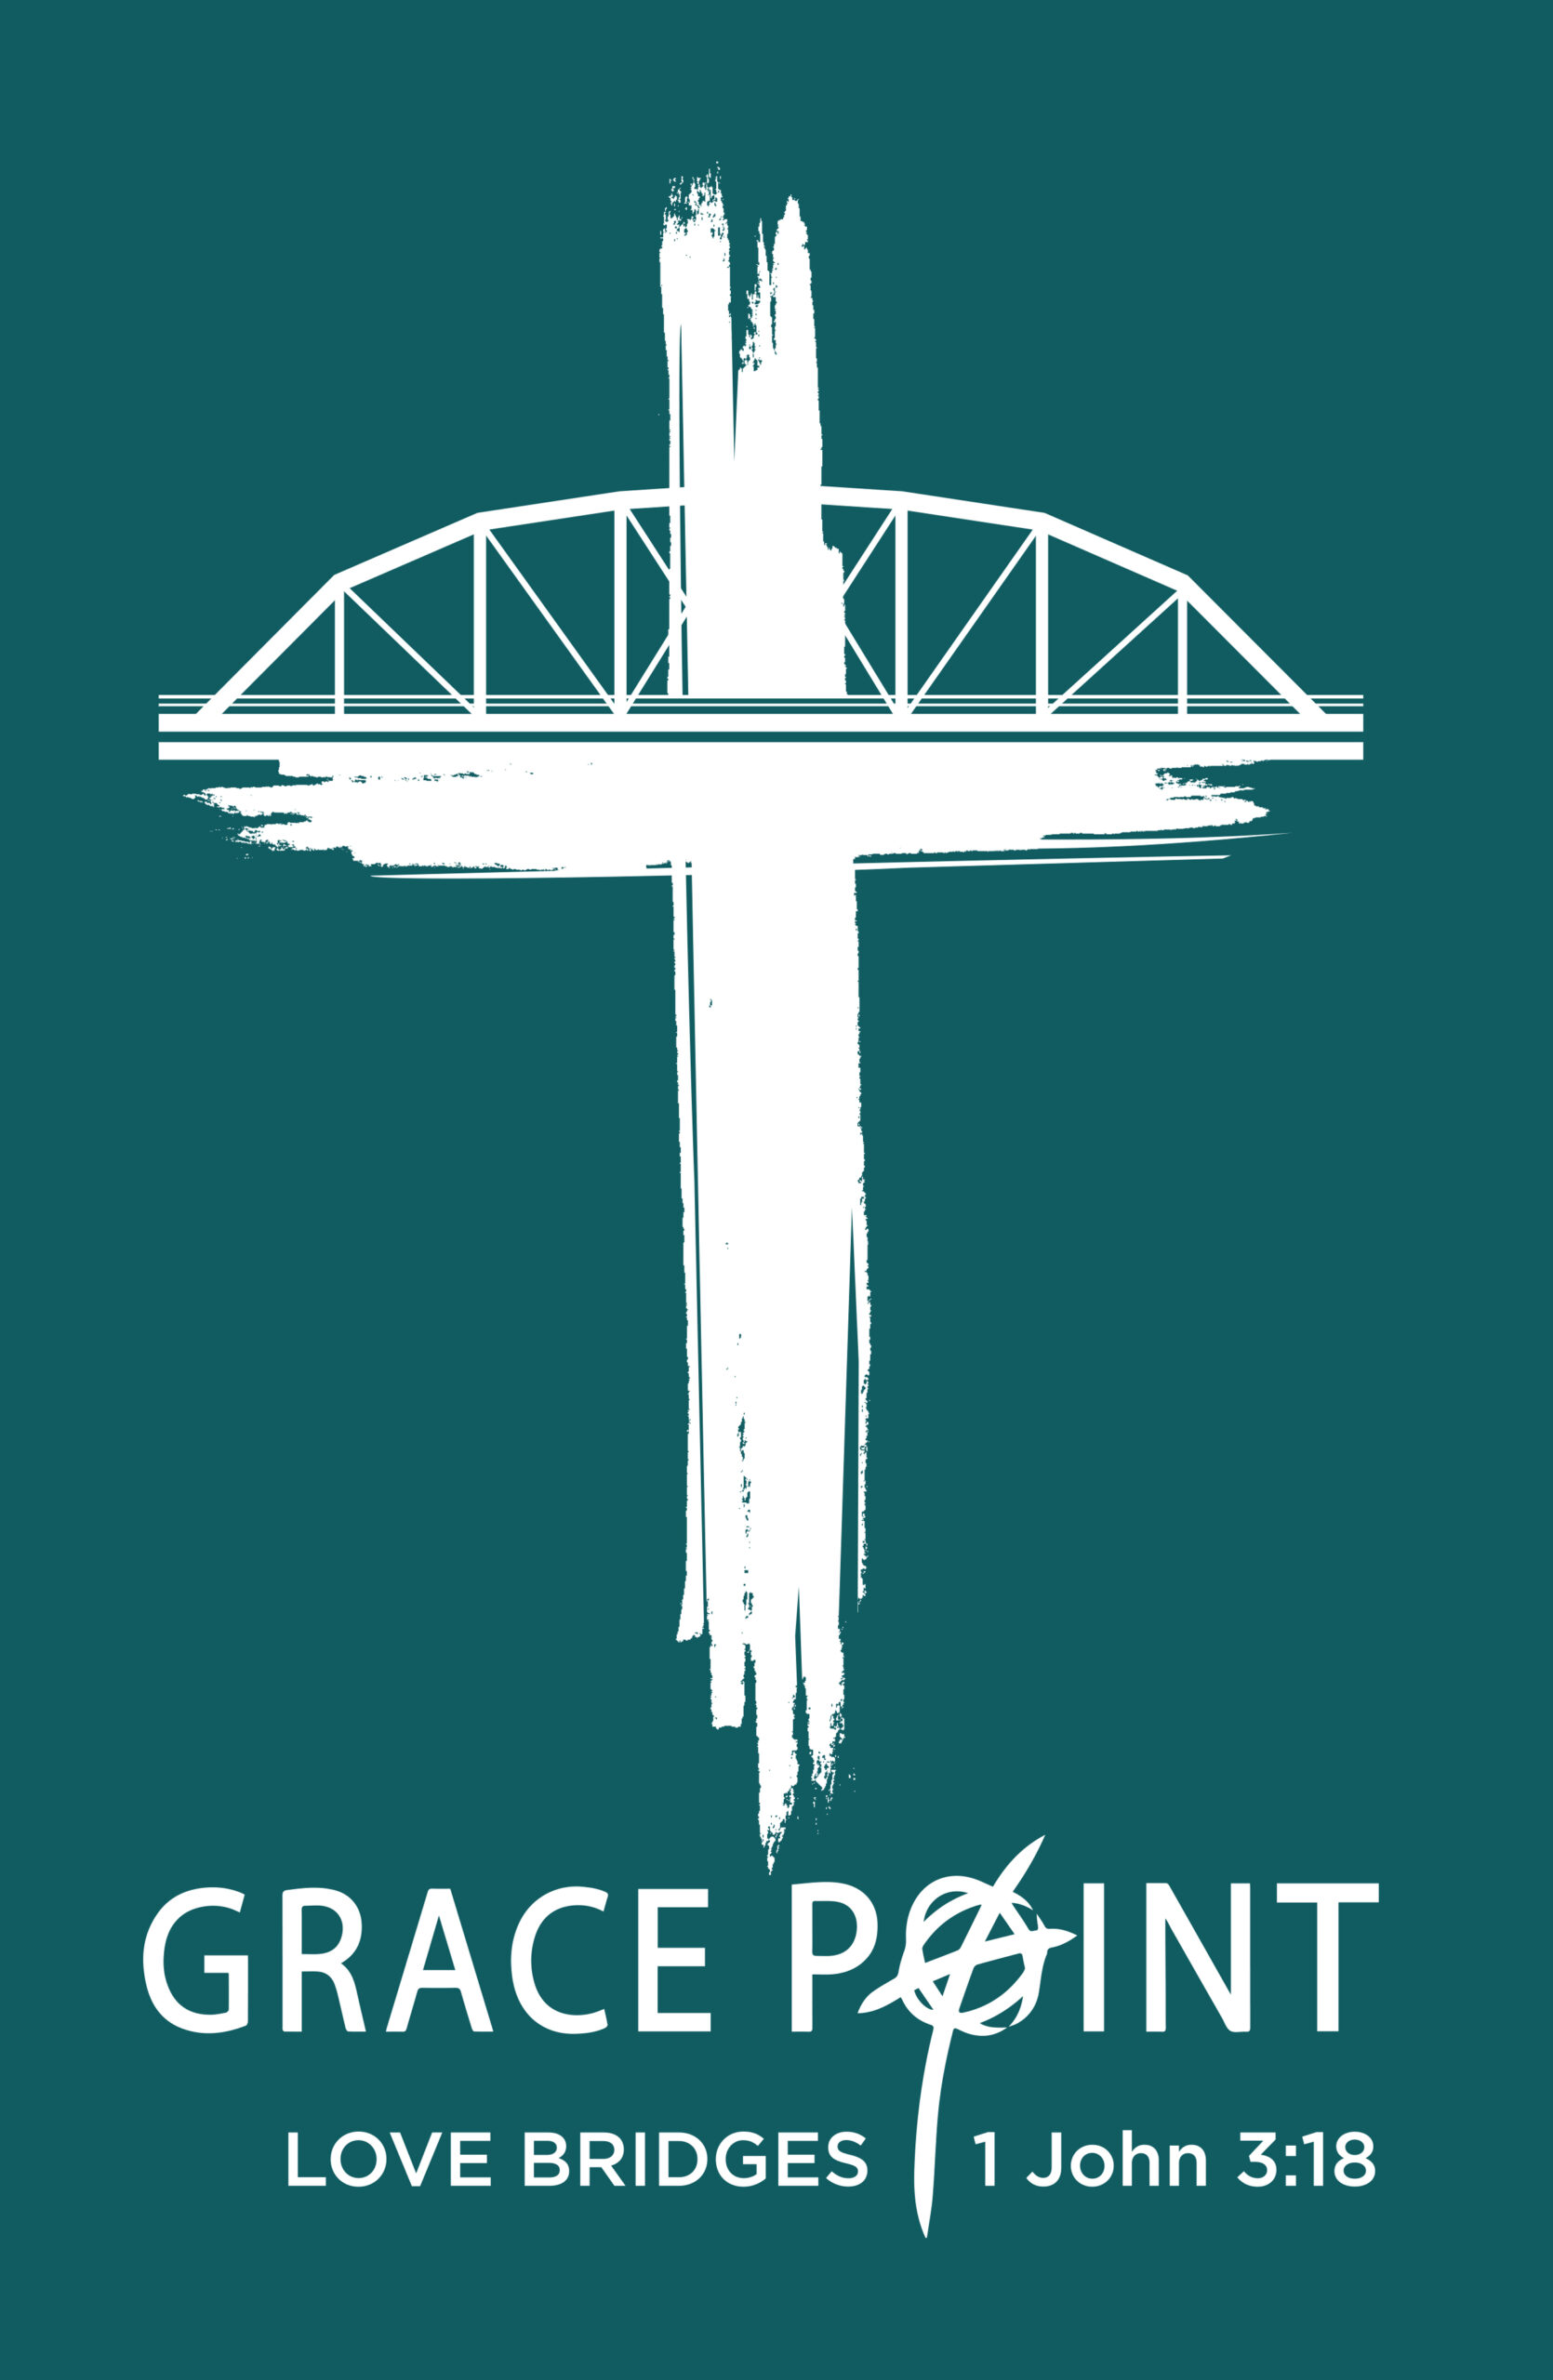 Grace Point Church of the Nazarene